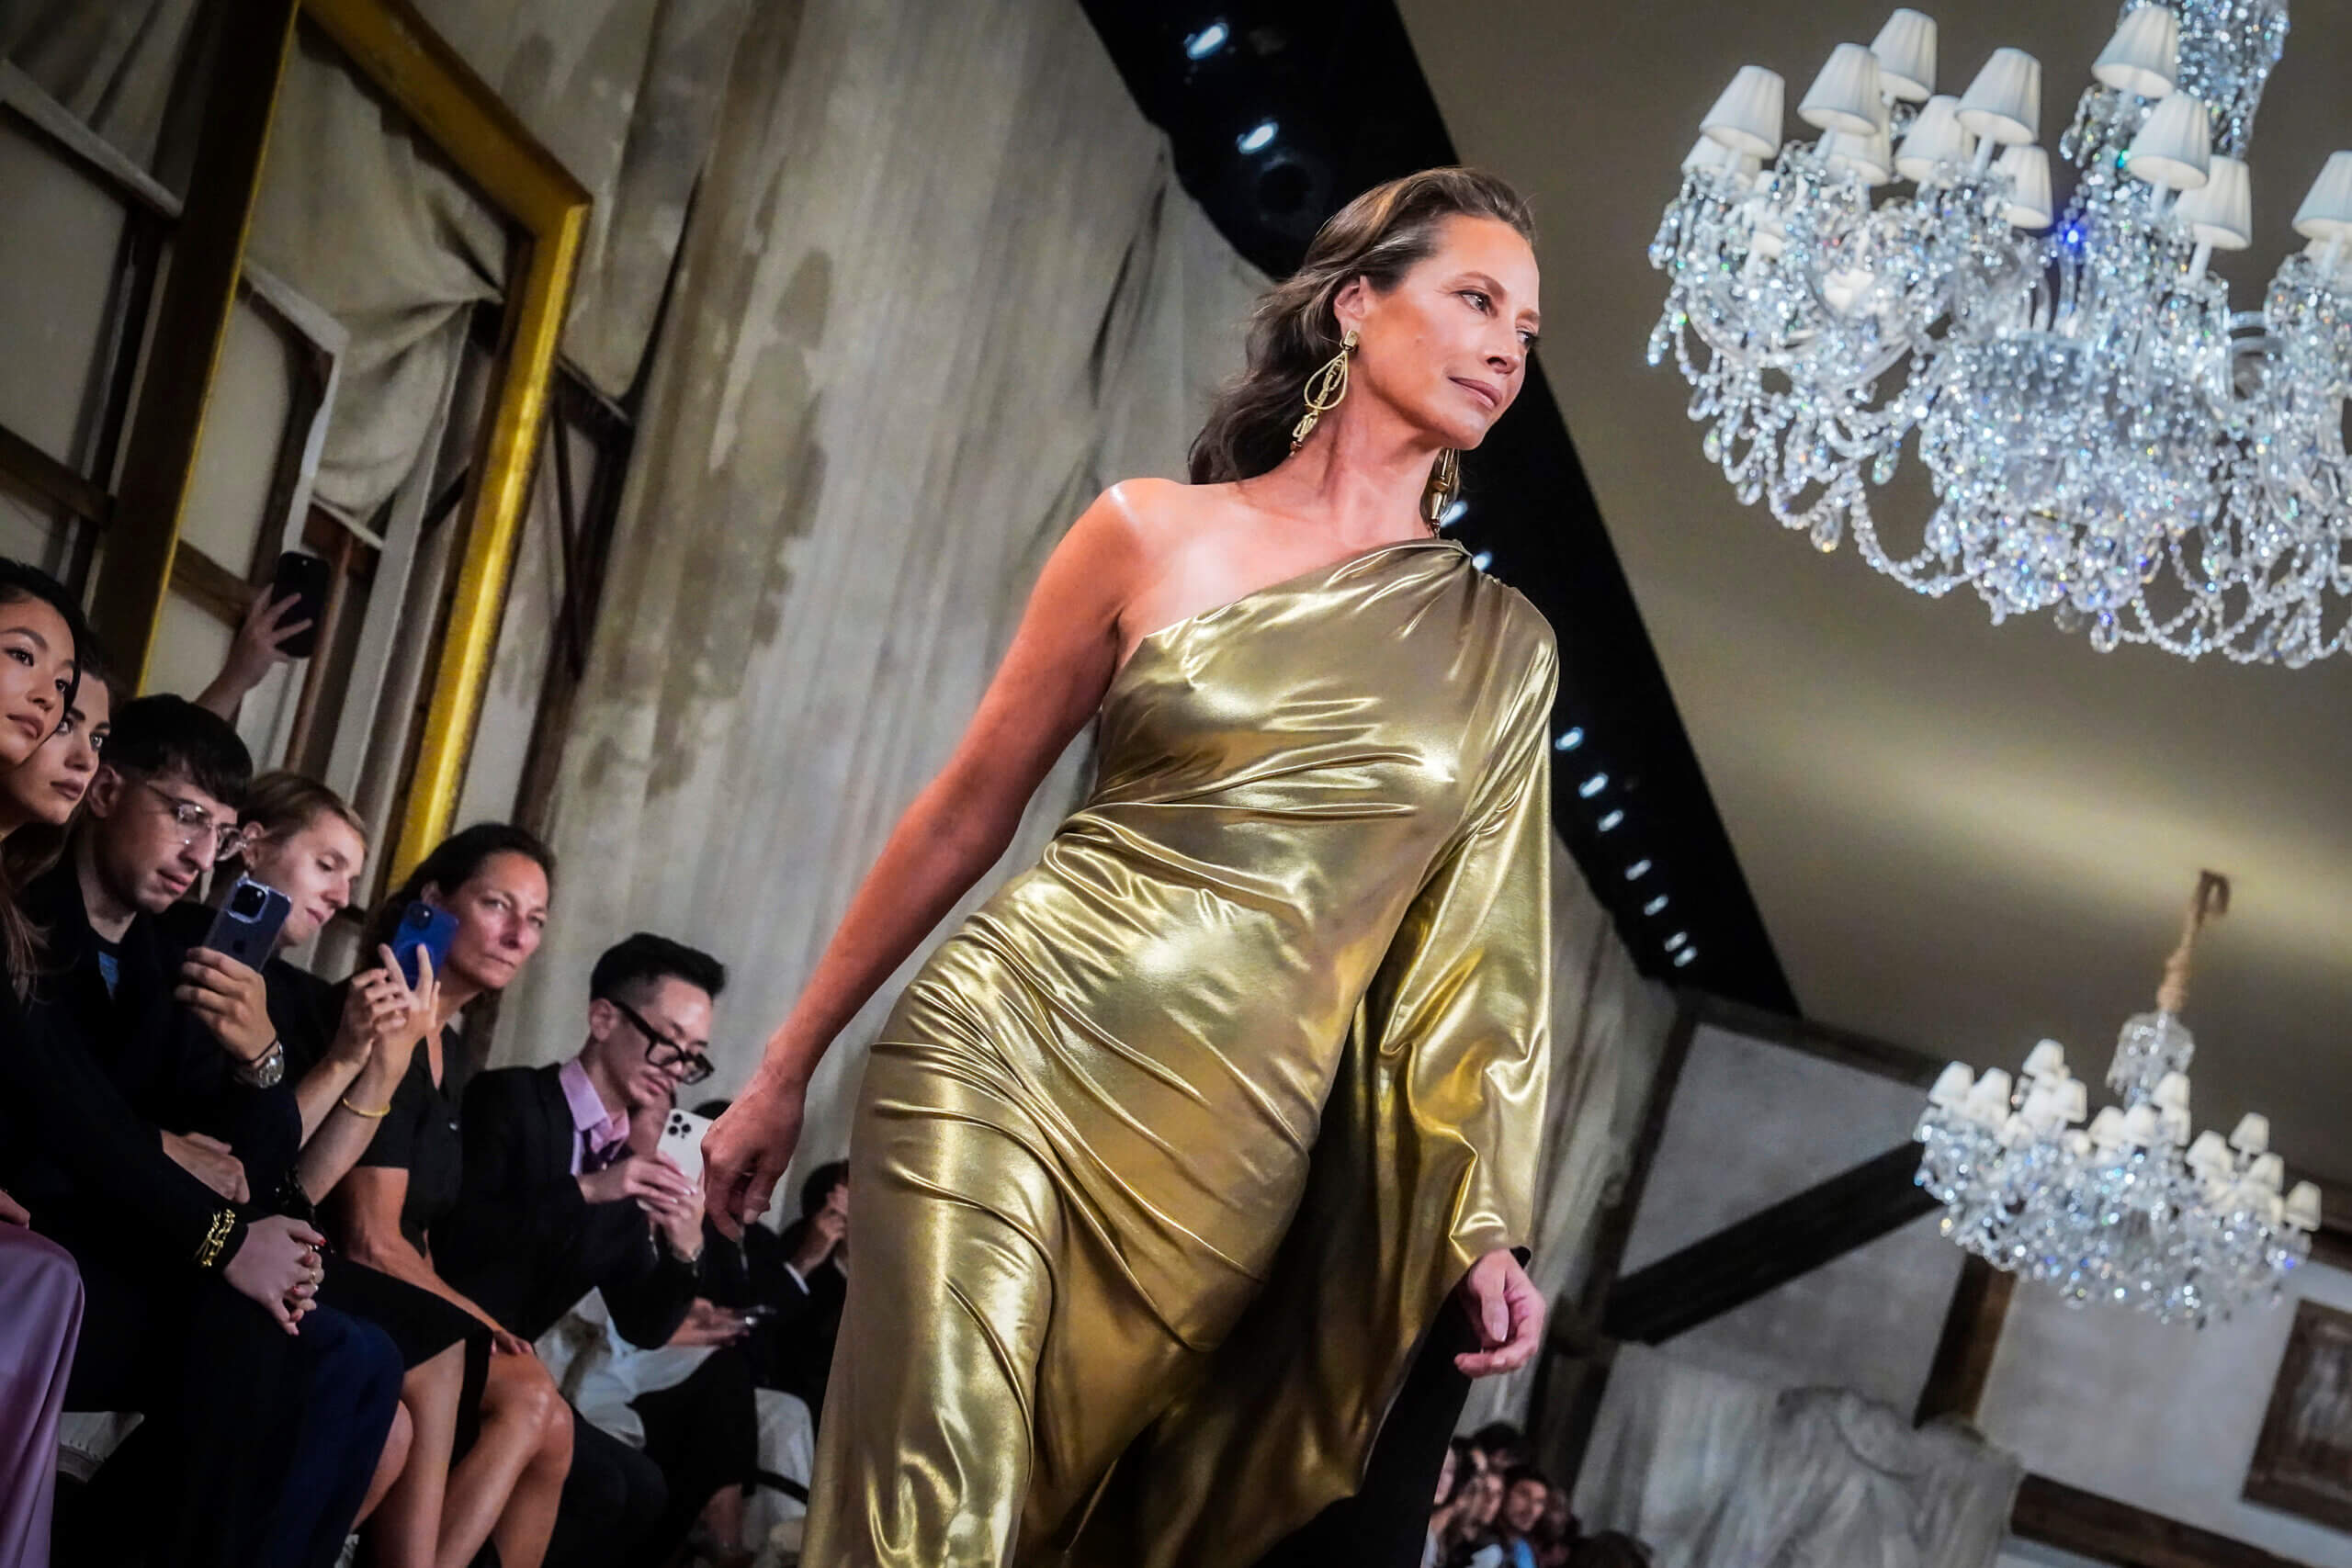 Ralph Lauren's star-studded return to New York Fashion Week